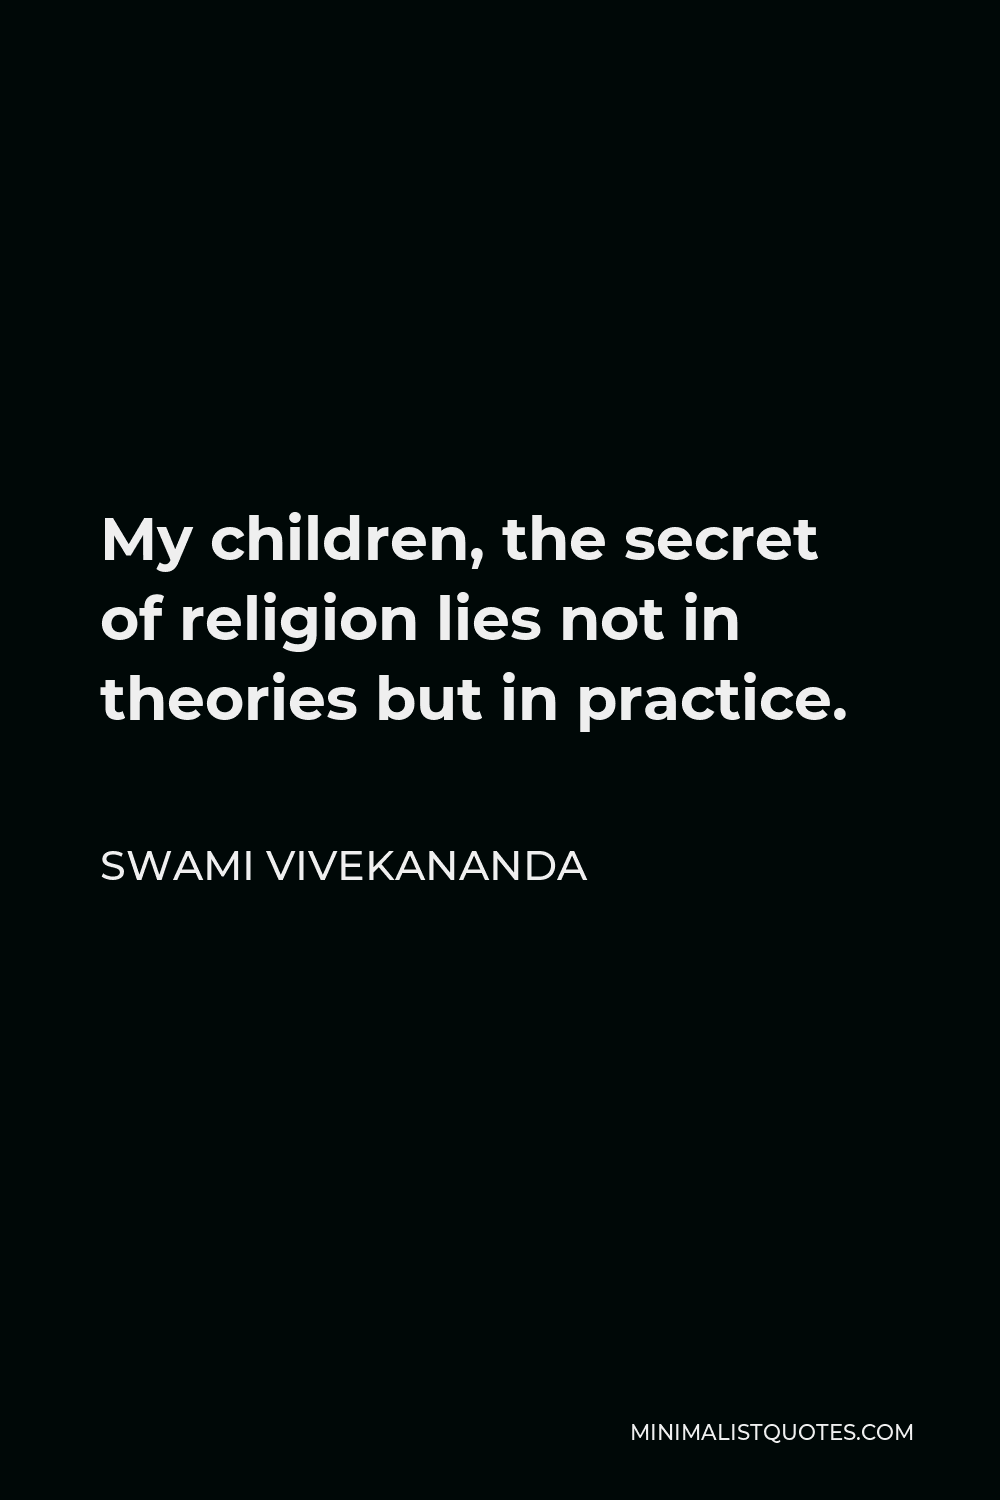 Swami Vivekananda Quote - My children, the secret of religion lies not in theories but in practice.